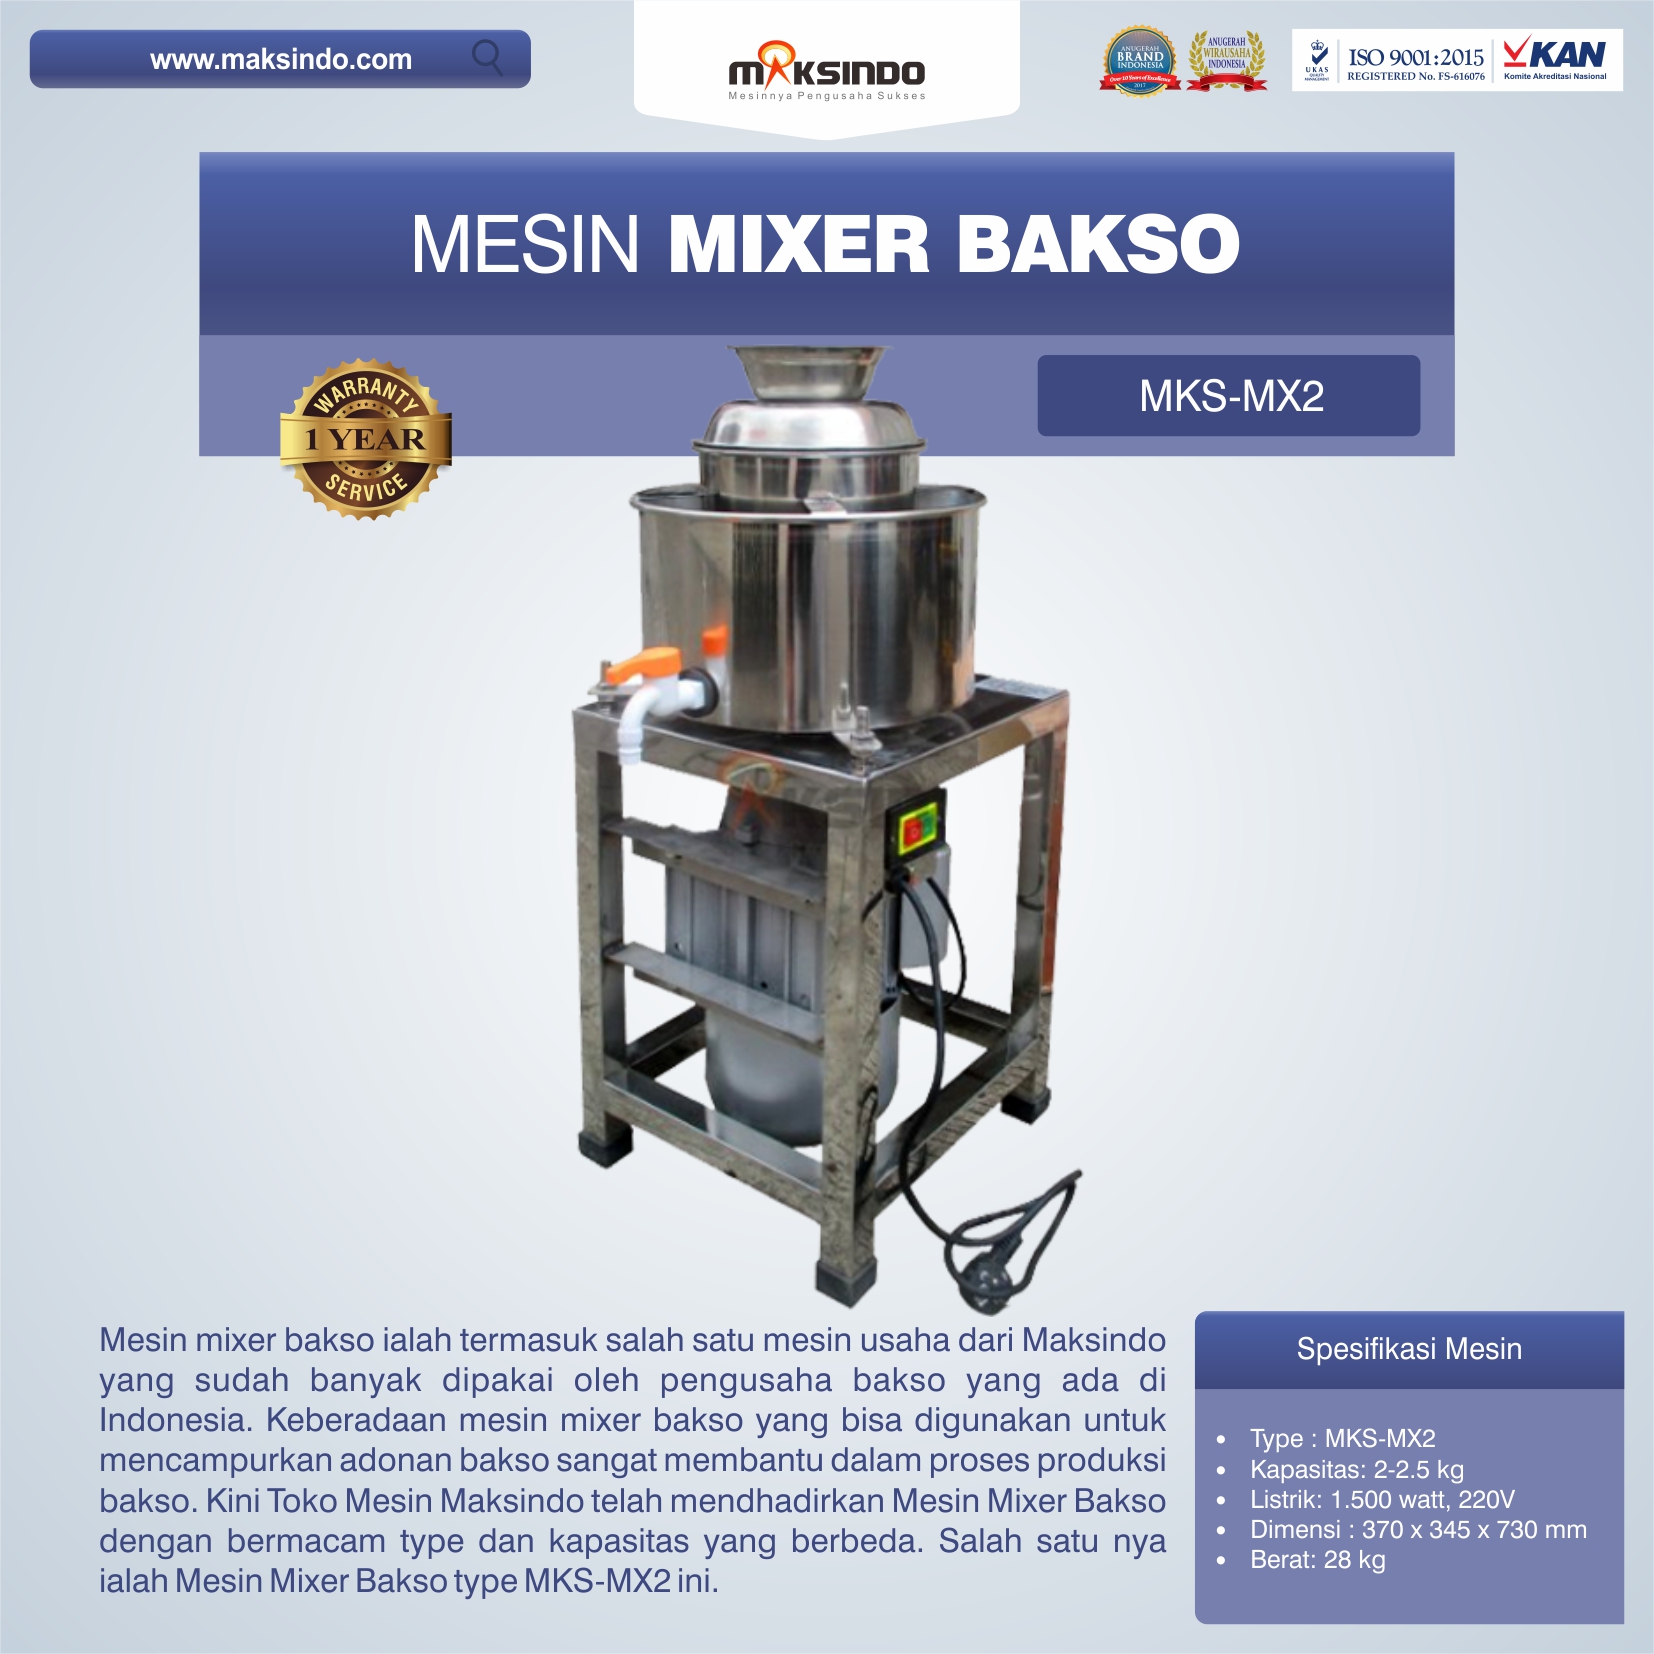 Jual Mesin Mixer Bakso MKS-MX2 Di Malang